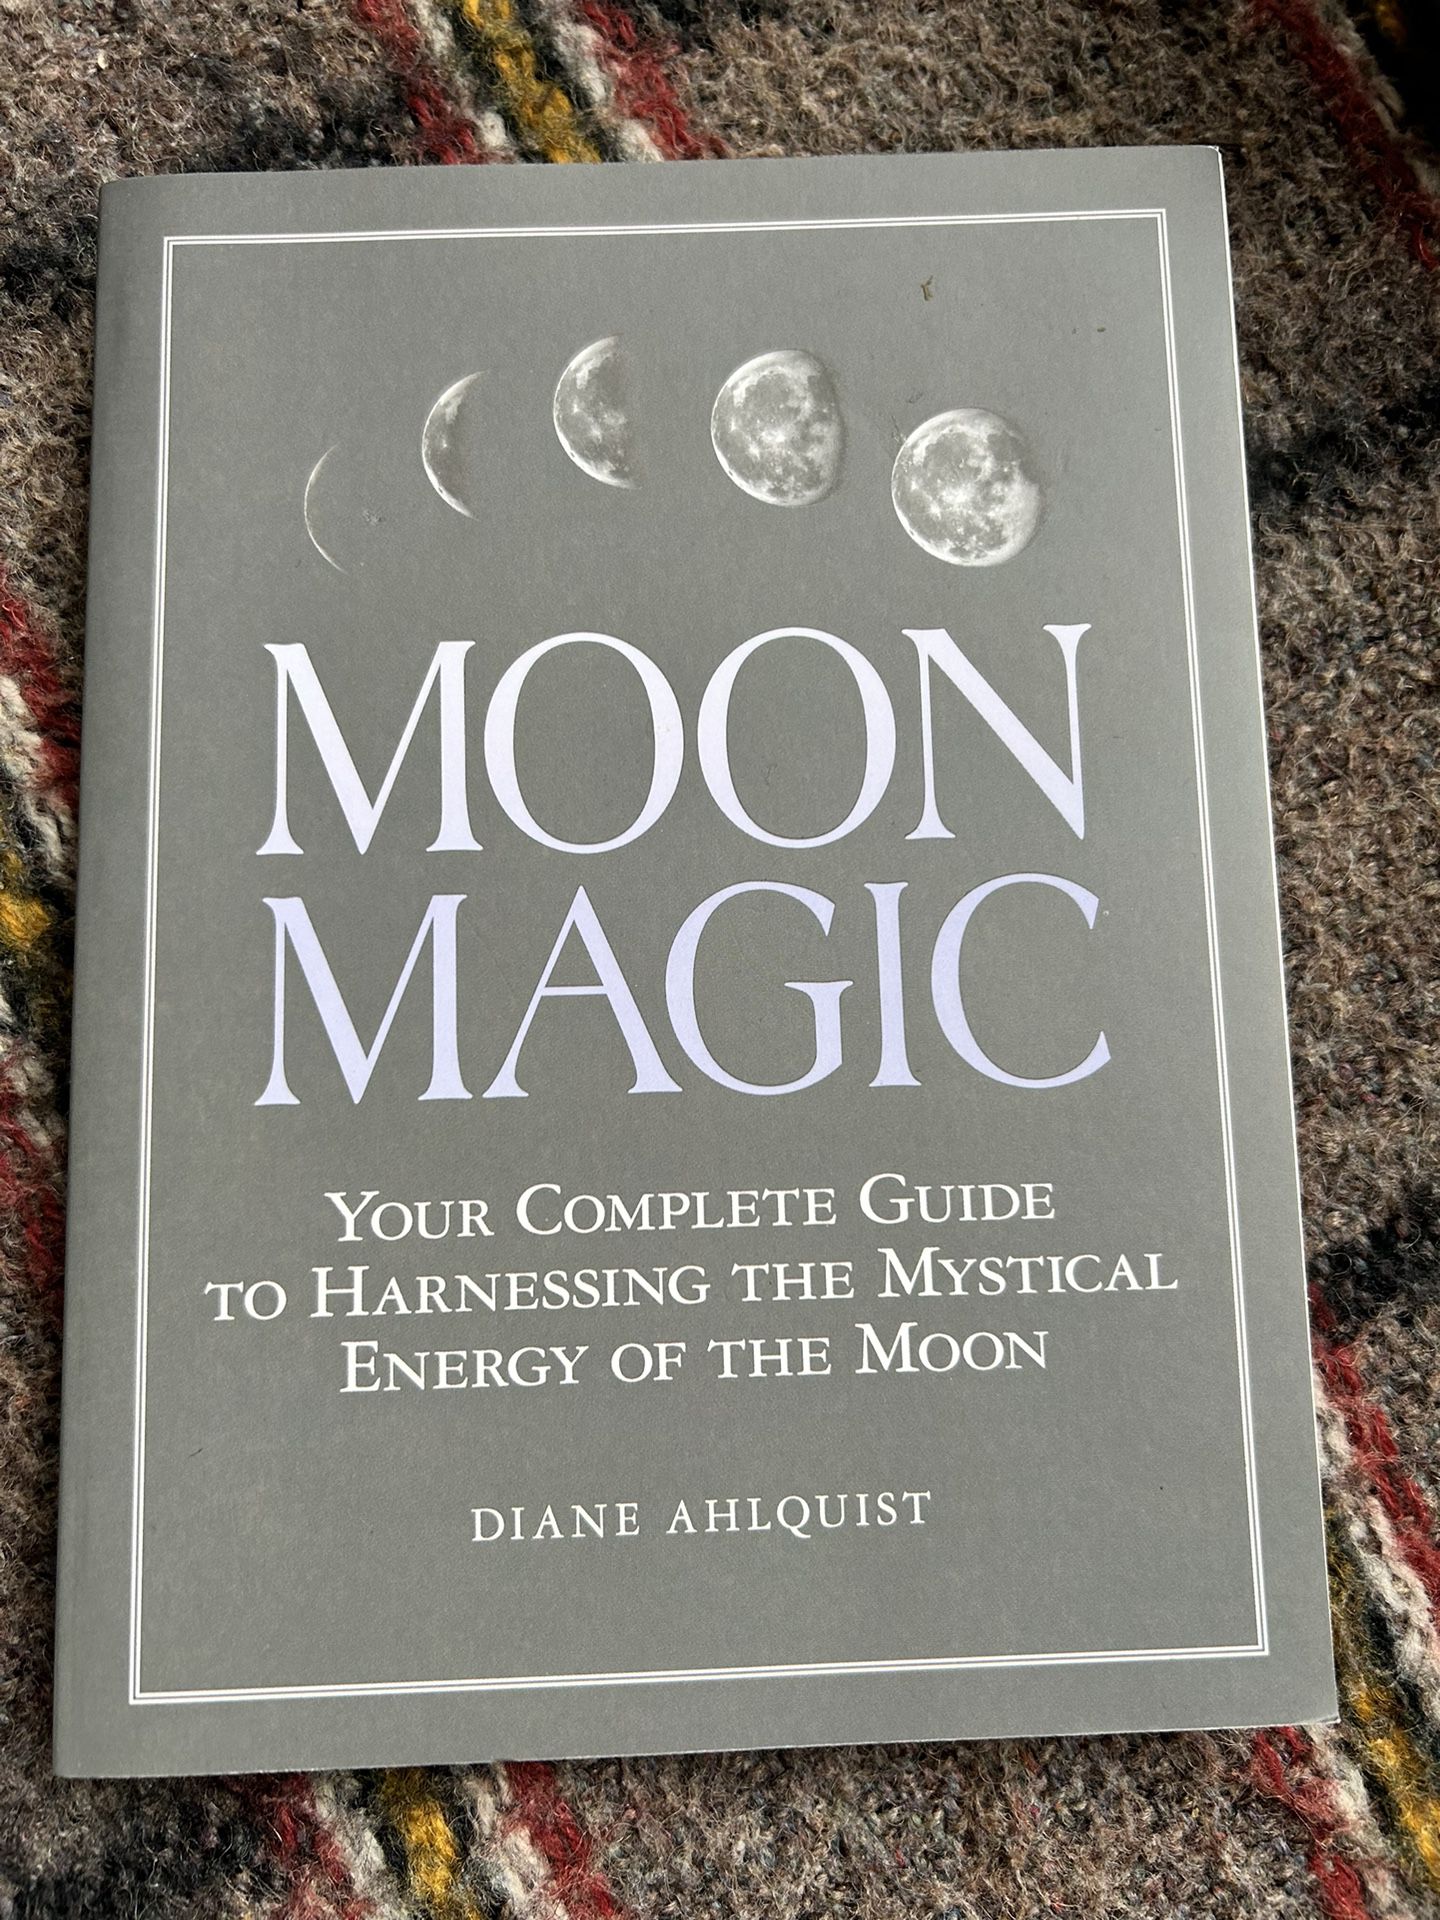 #Moon #magic book #witch #lunar